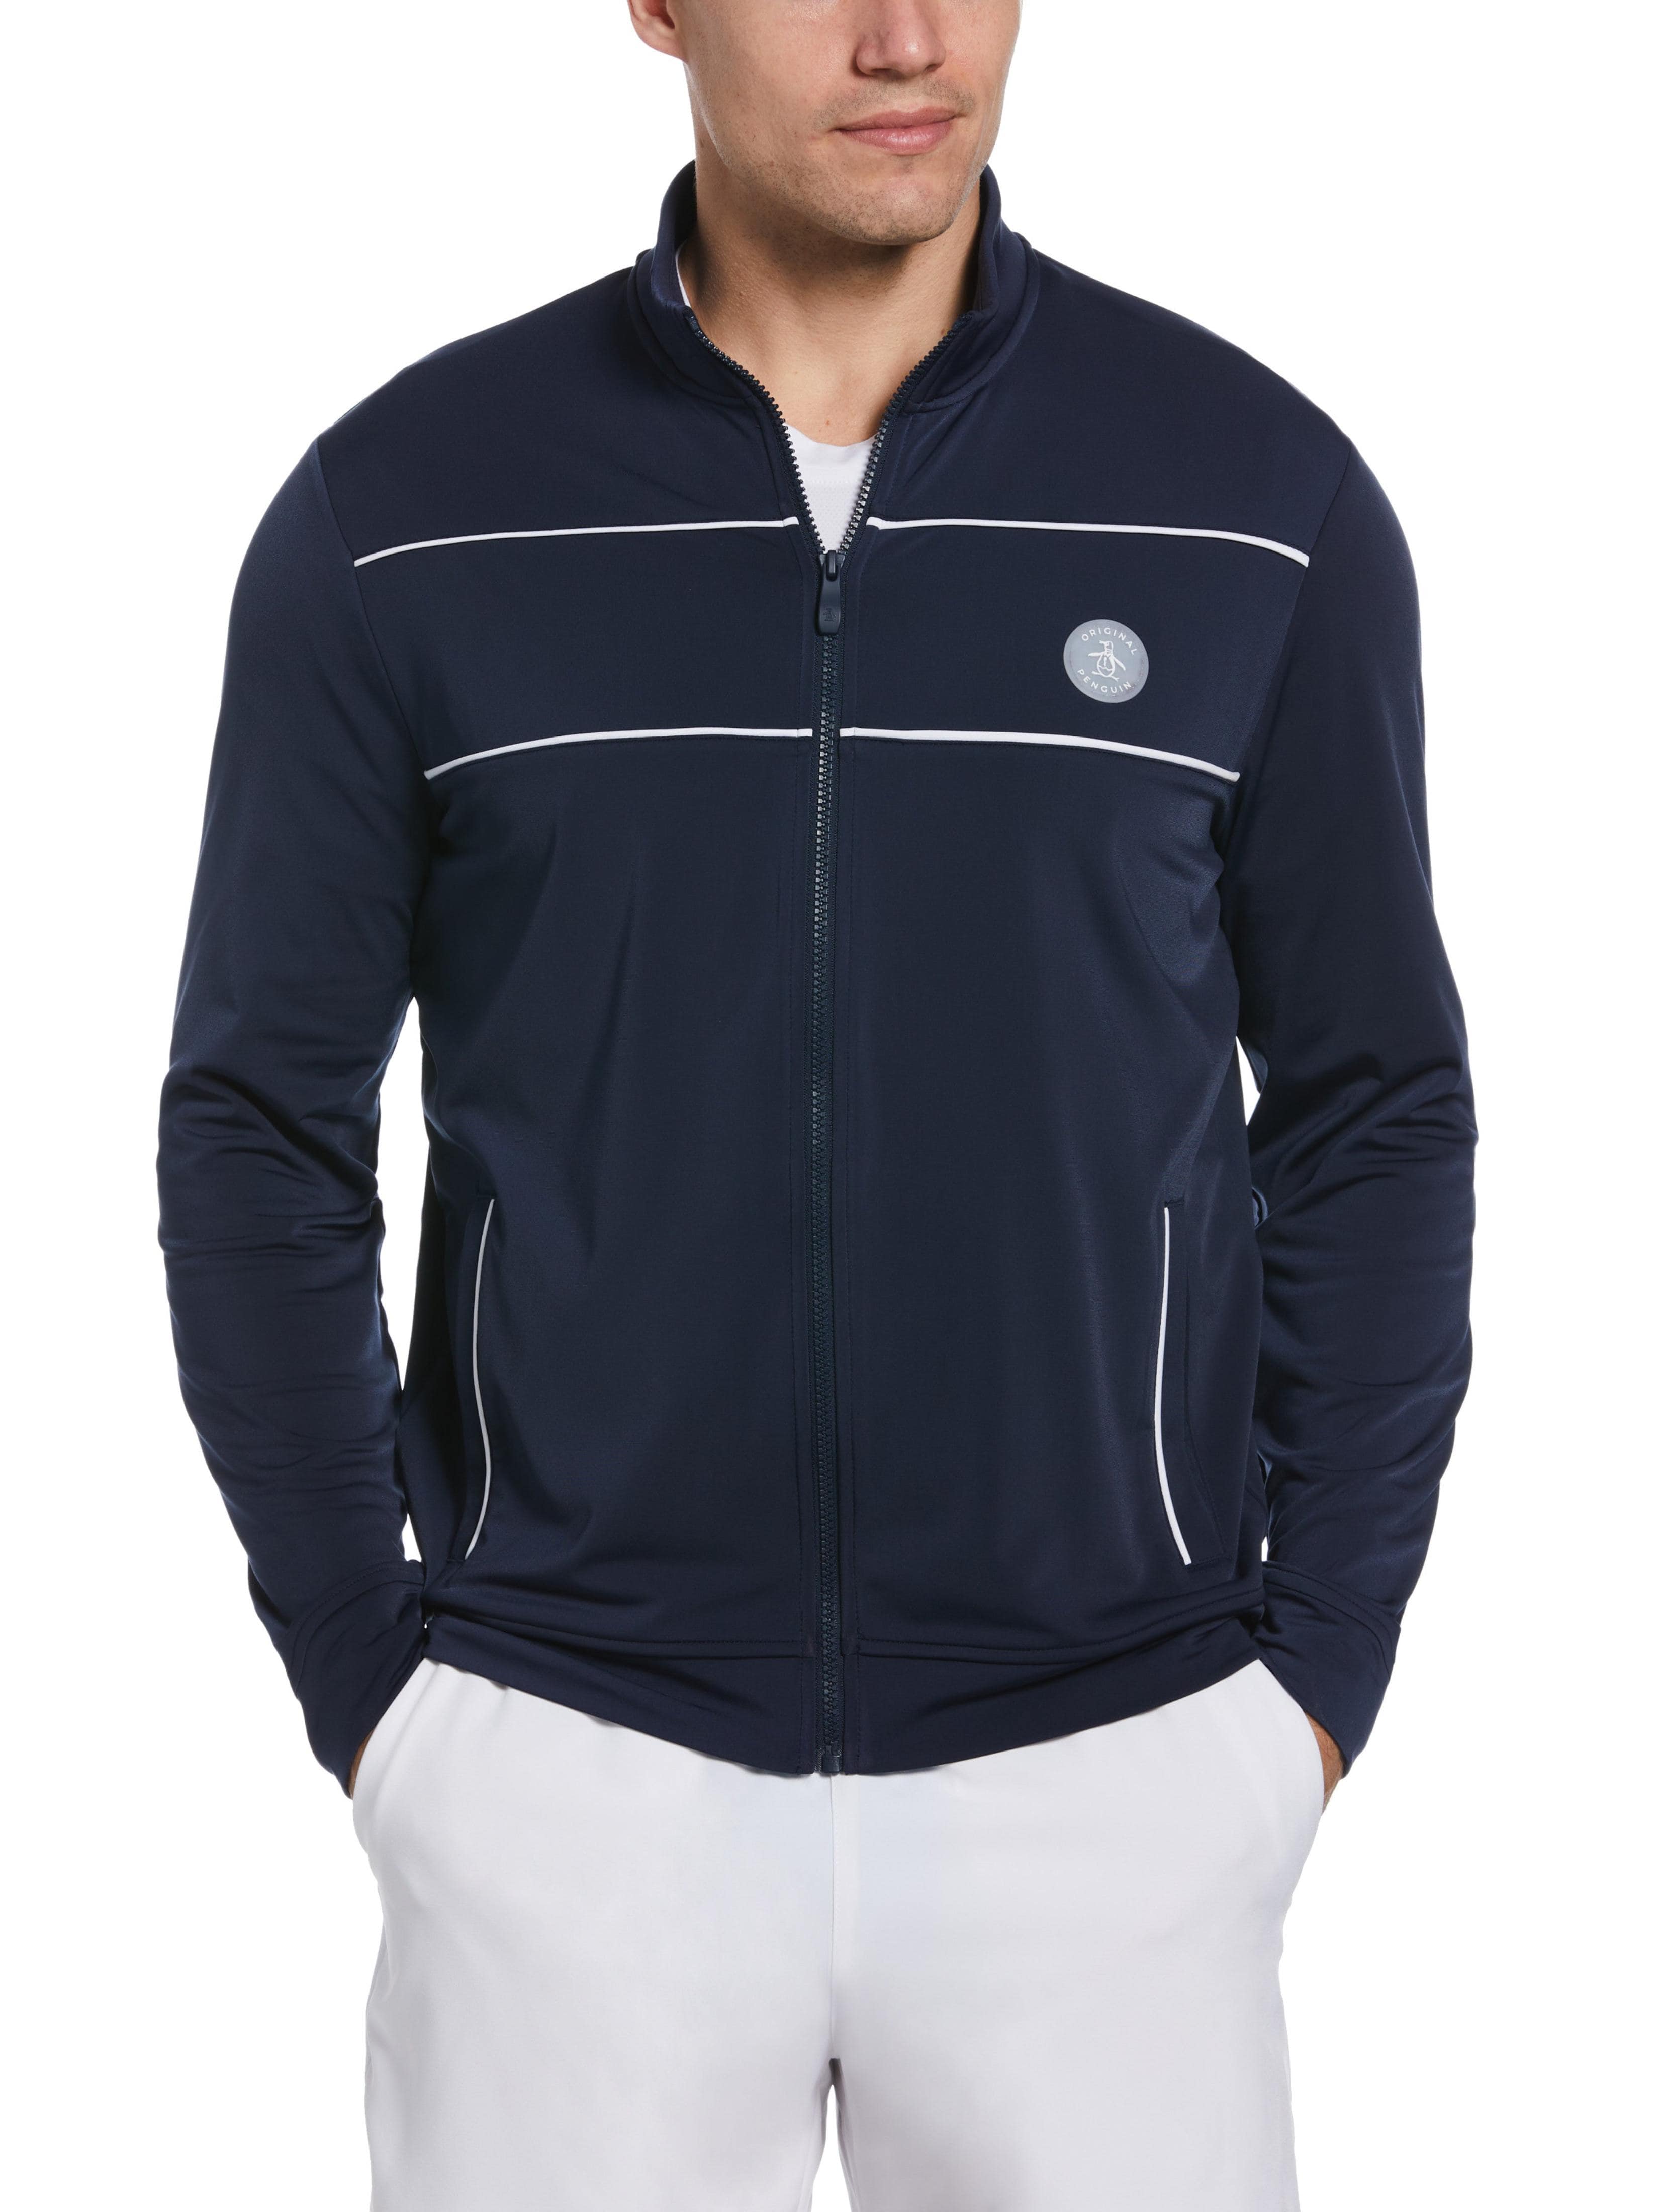 Original Penguin Mens Essential Tennis Track Jacket Top, Size XL, Dark Navy Blue, Polyester/Elastane | Golf Apparel Shop